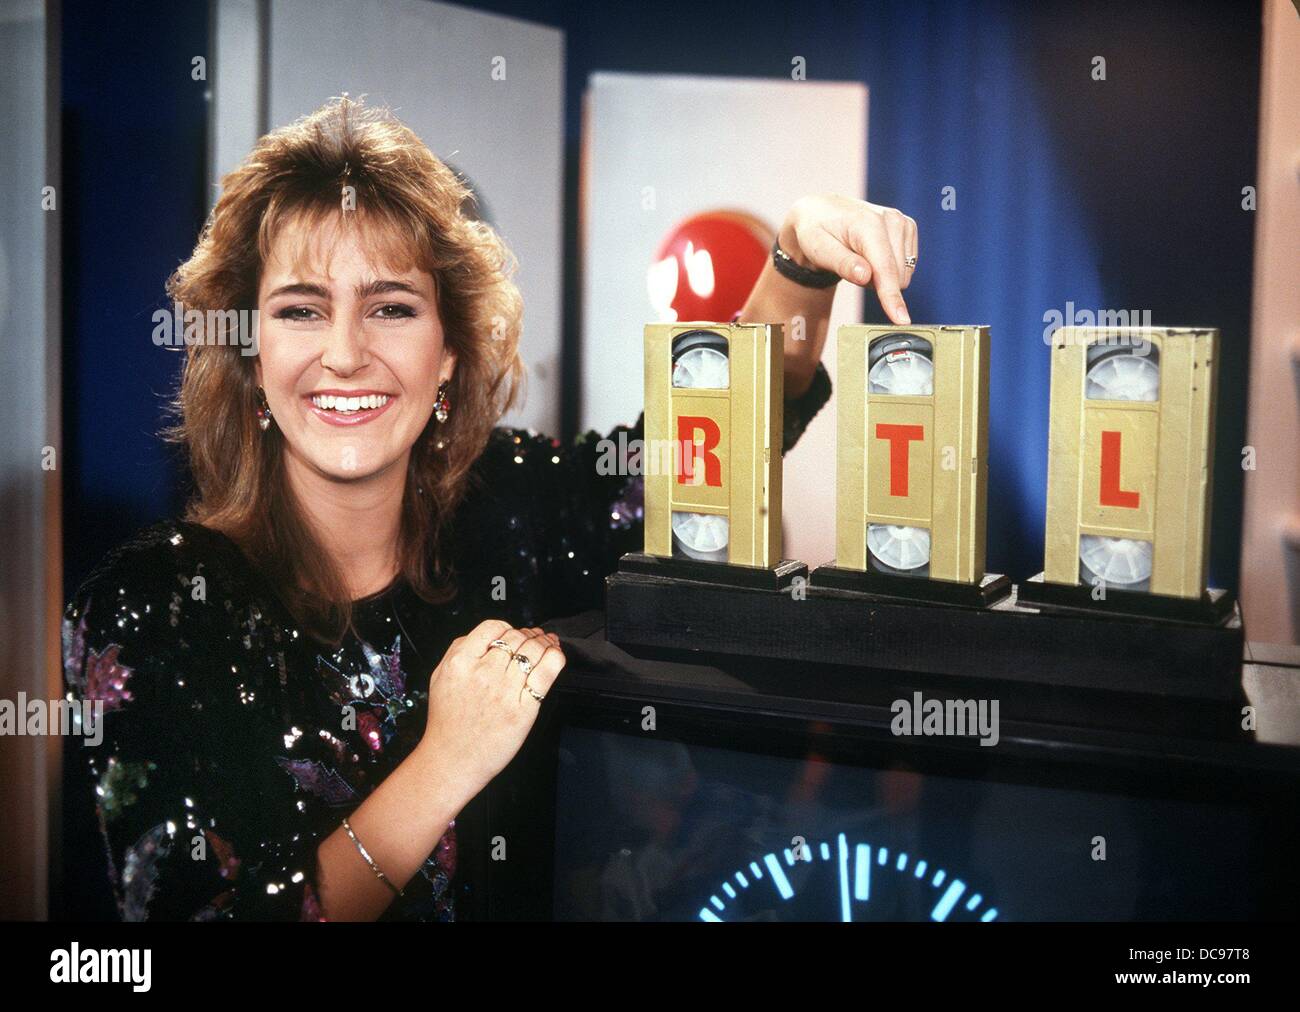 RTL plus Moderatorin Nicole Bierhoff öffnet das Programm des privaten Fernsehsenders RTL plus am 1. Januar 1988. Stockfoto